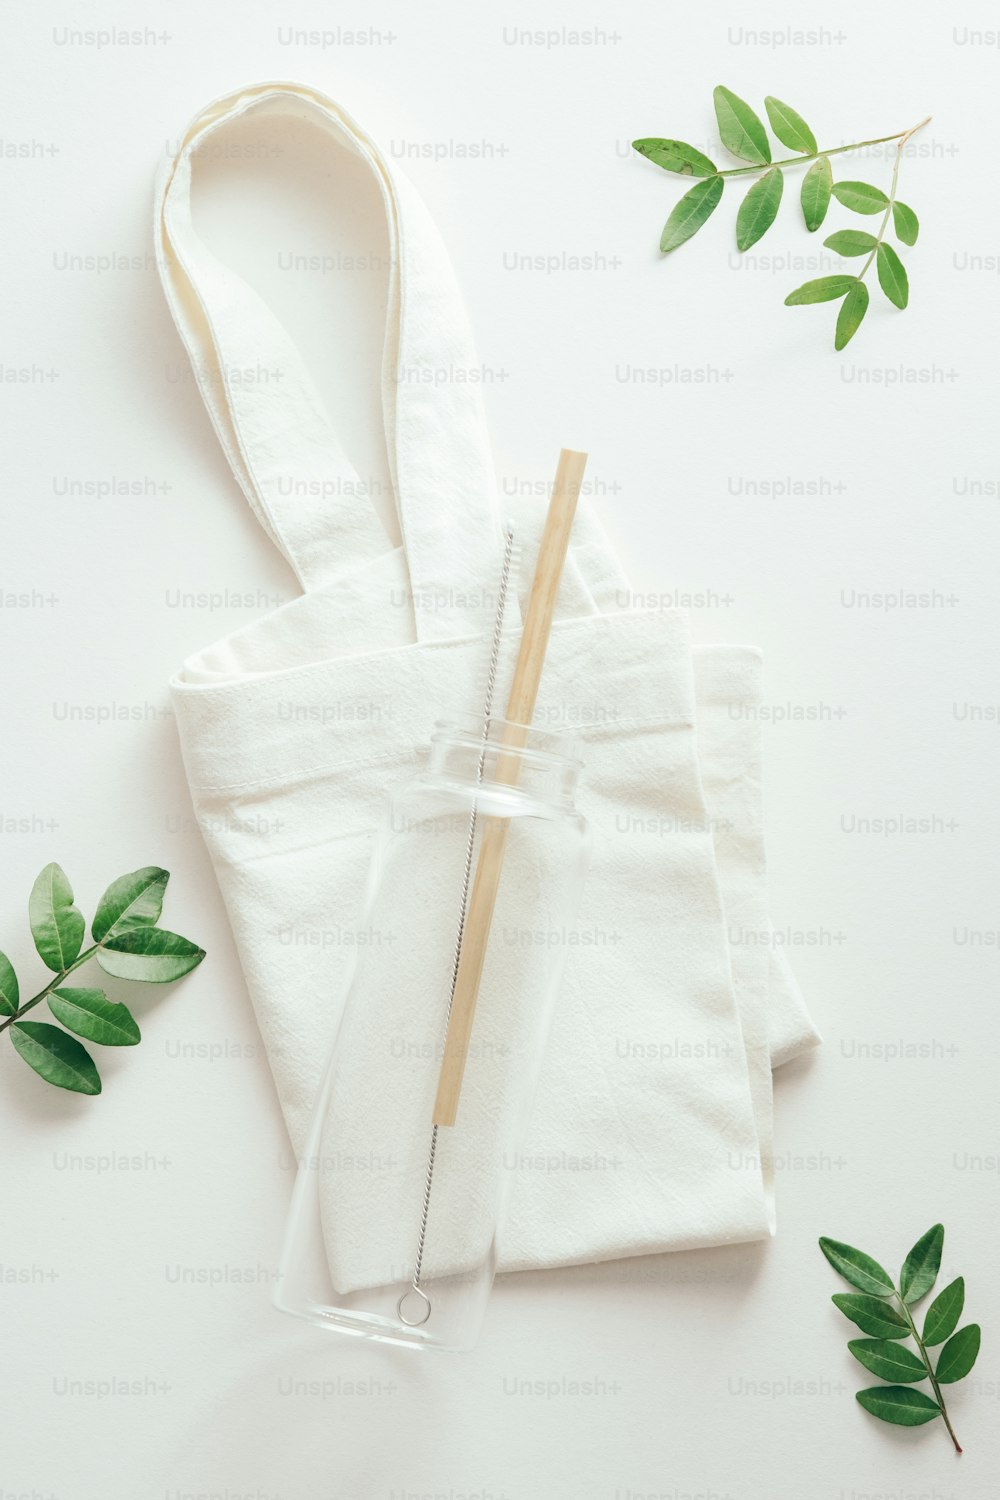 Botella de agua de vidrio ecológica reutilizable con pajita de bambú en bolsa de compras de tela con hojas verdes. Concepto de estilo de vida sostenible.